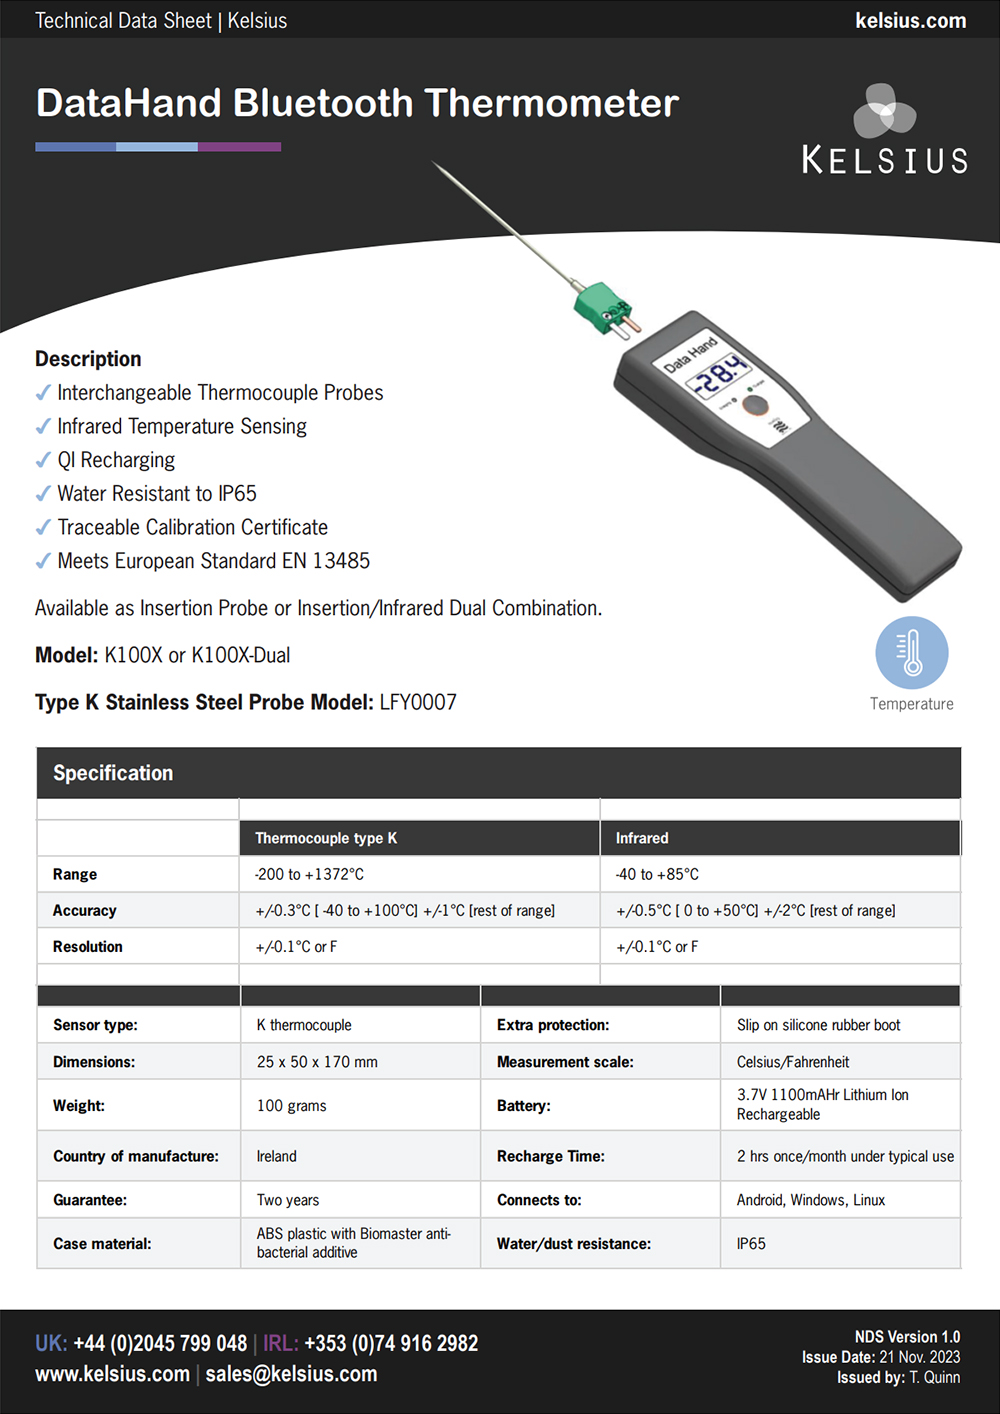 DataHand-Bluetooth-Thermometer-Data-Sheet-Kelsius-Website-Thumbnail.jpg